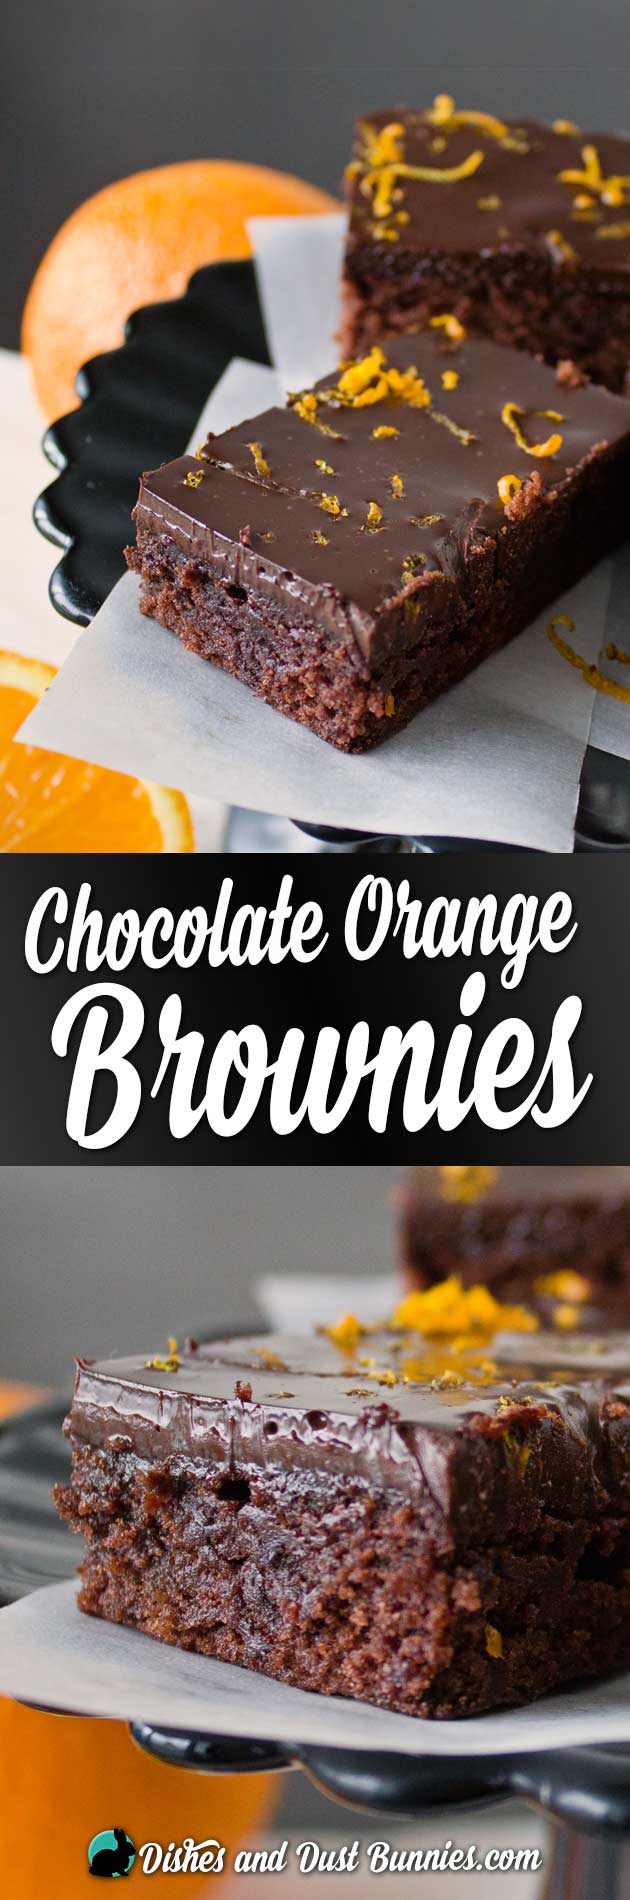 Chocolate Orange Brownies from dishesanddustbunnies.com